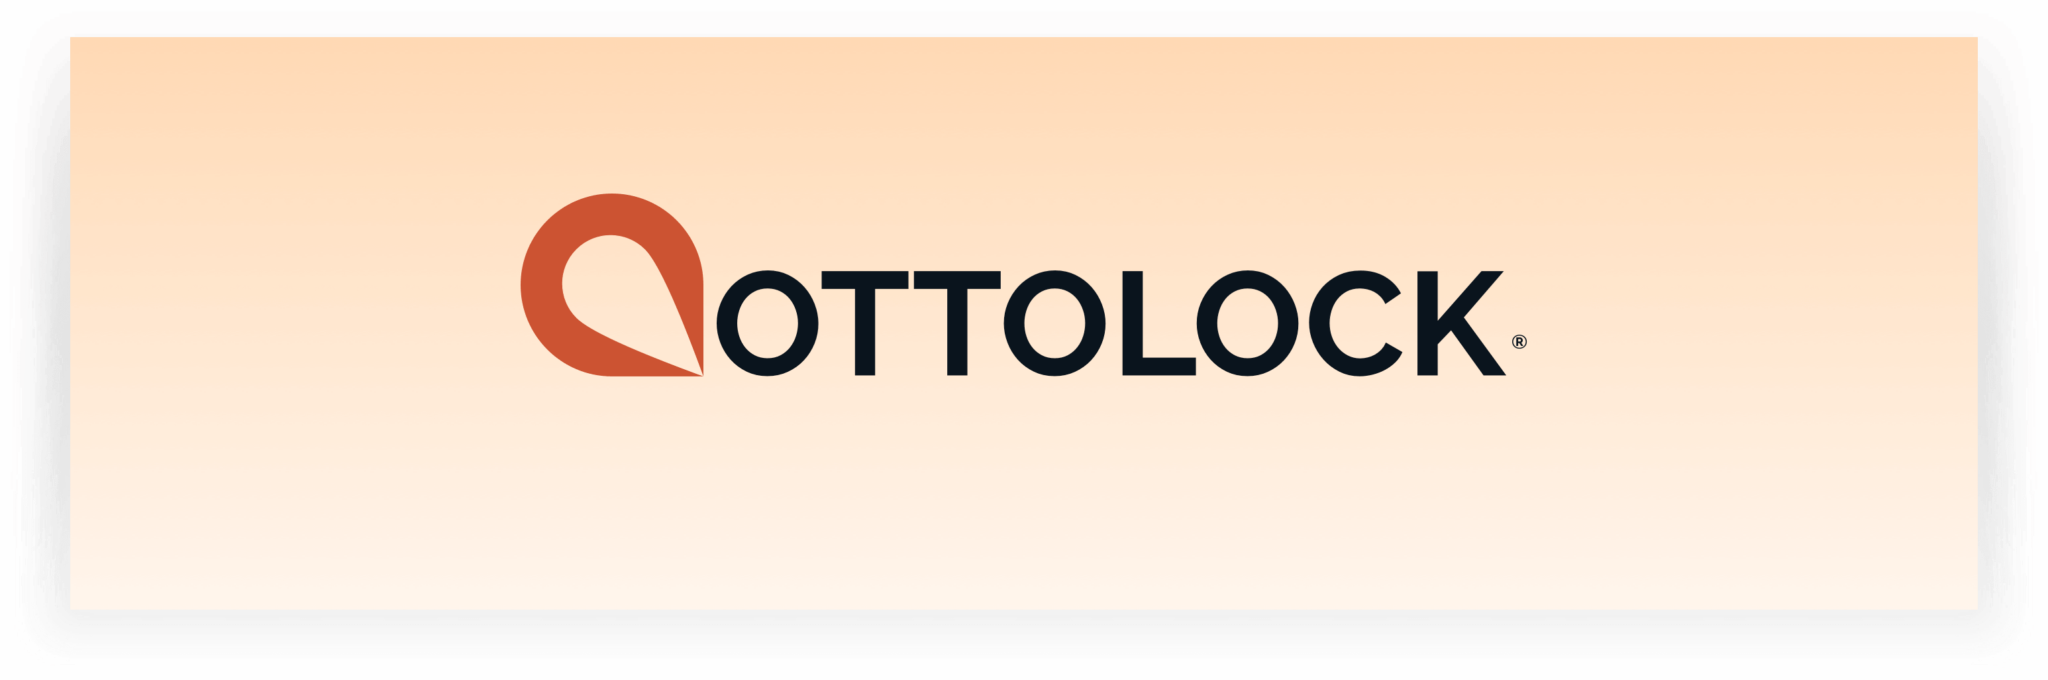 OTTO logo banner